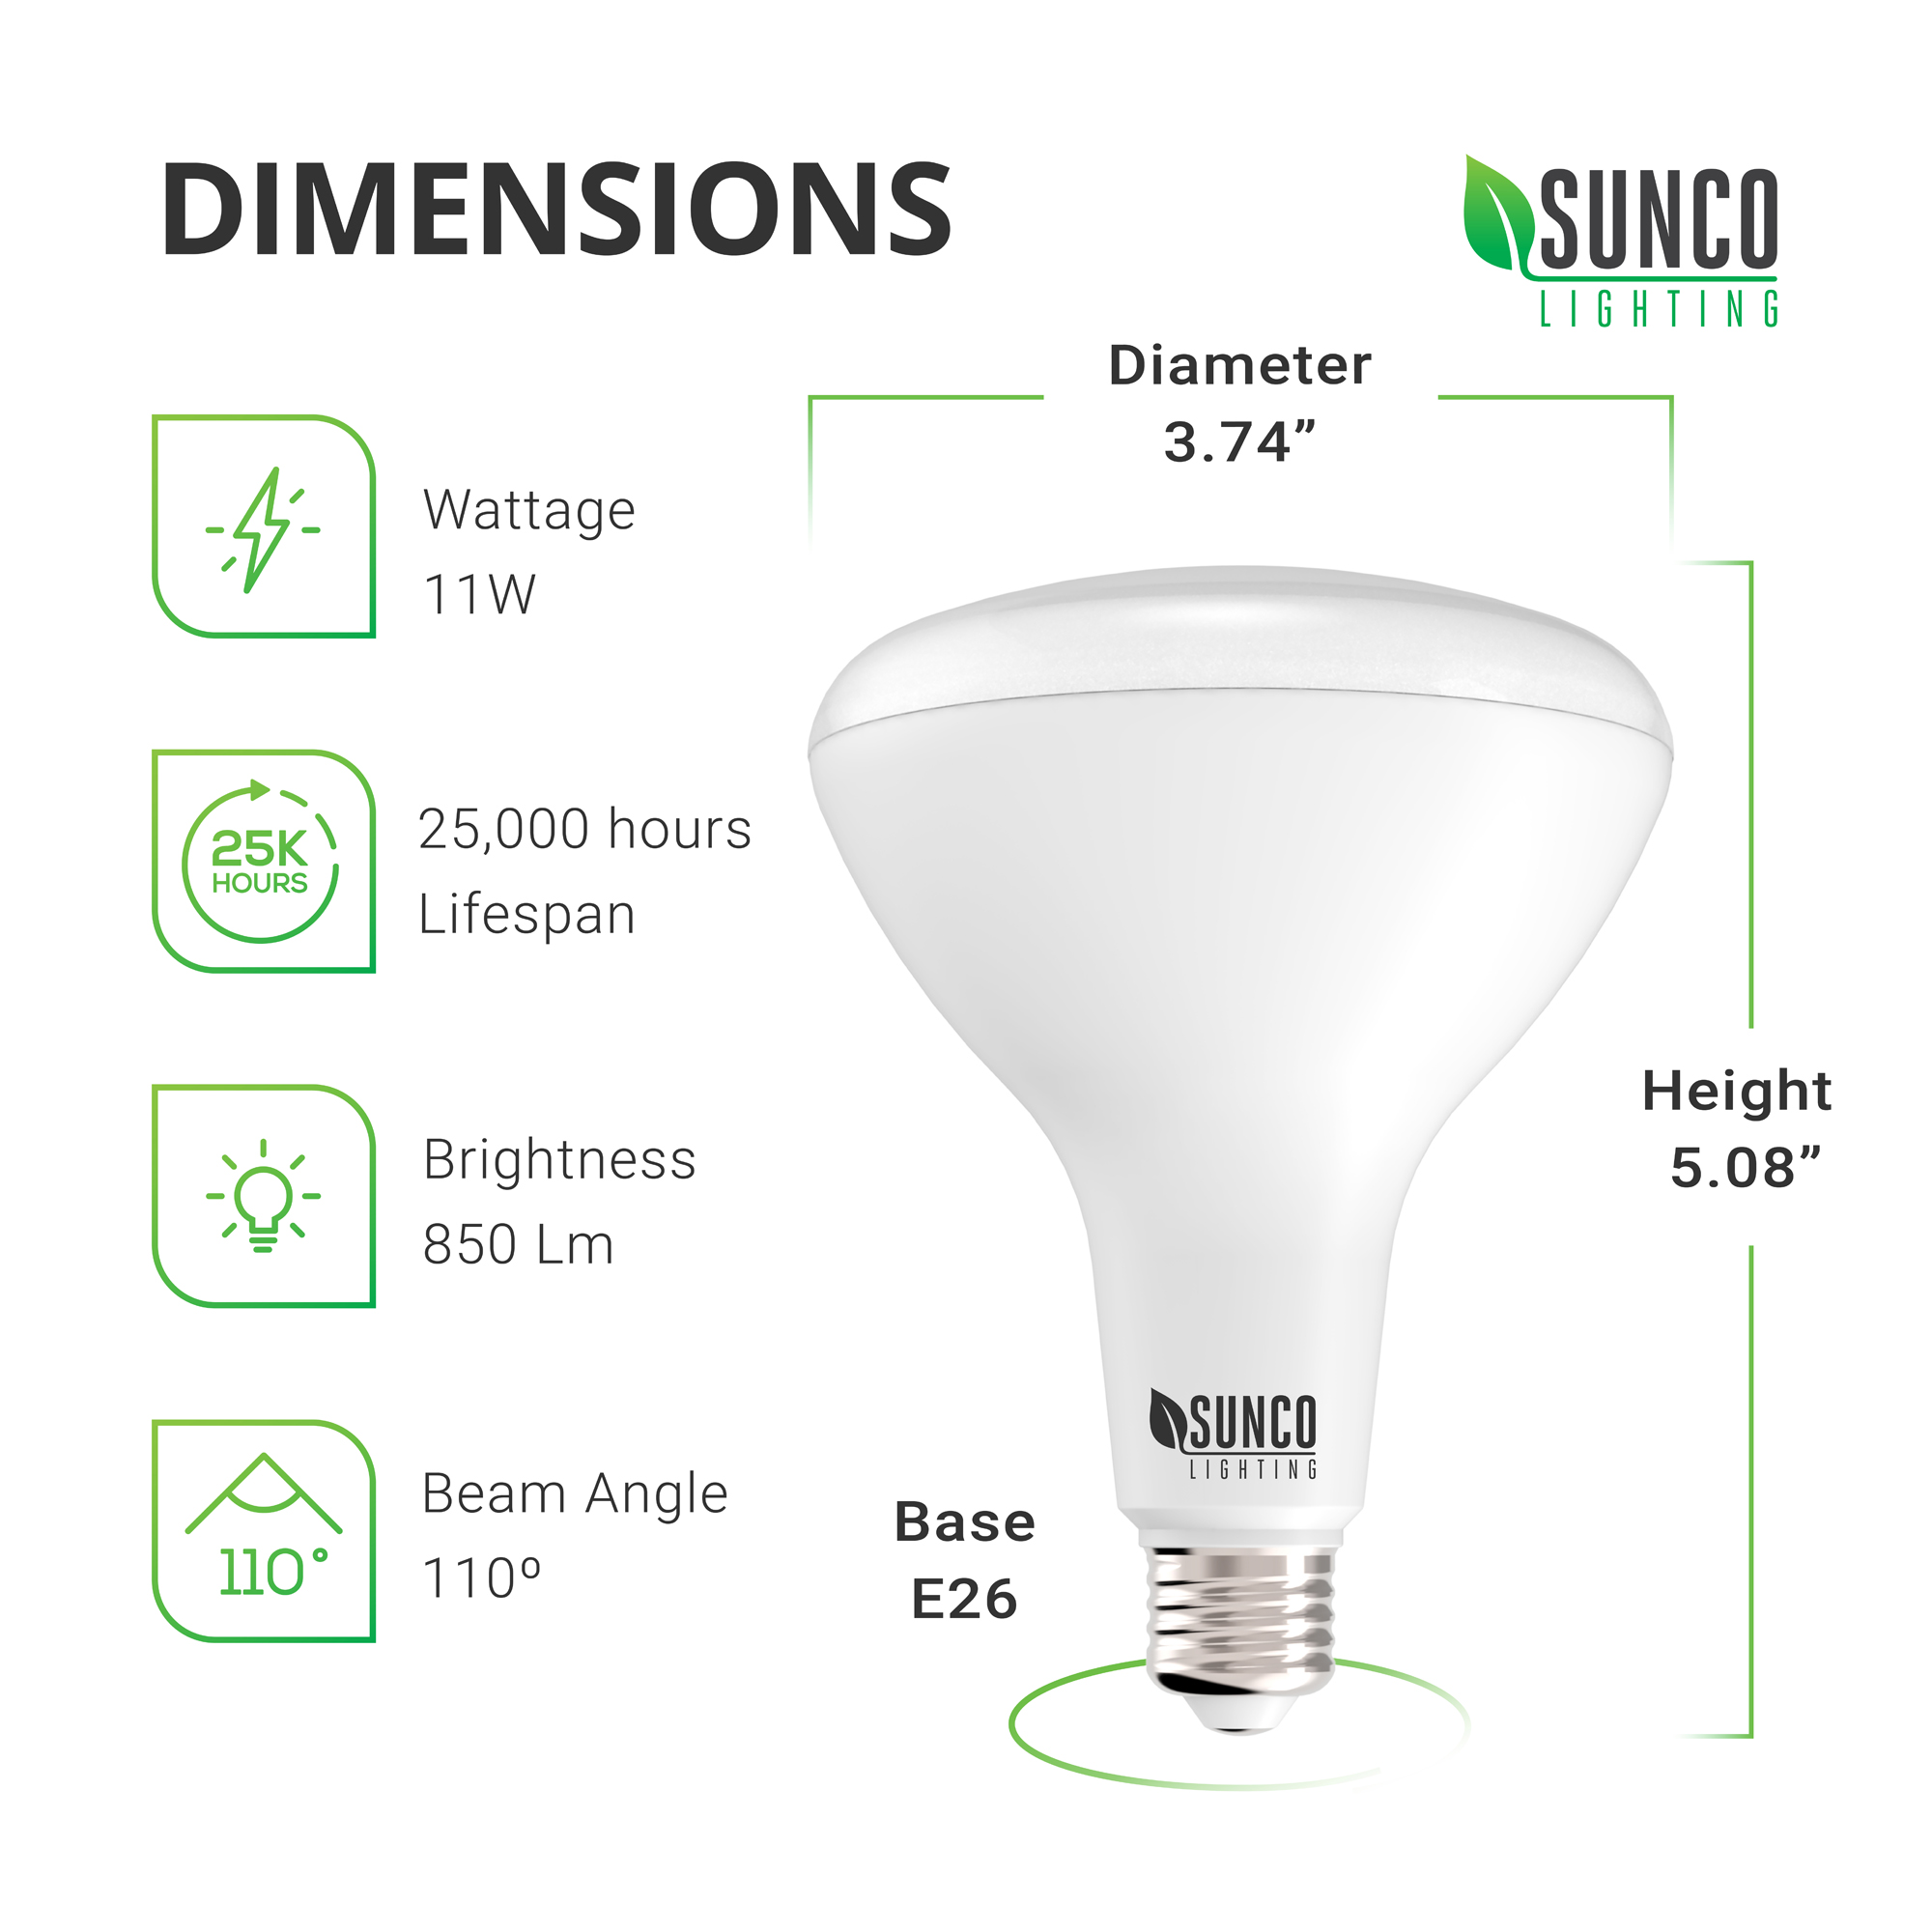 Sunco Lighting Pack BR30 LED Bulb 11W=65W, 2700K Soft White, 850 LM, E26  Base, Dimmable, 25,000 Lifetime Hours, Indoor Flood Light for Cans UL   Energy Star